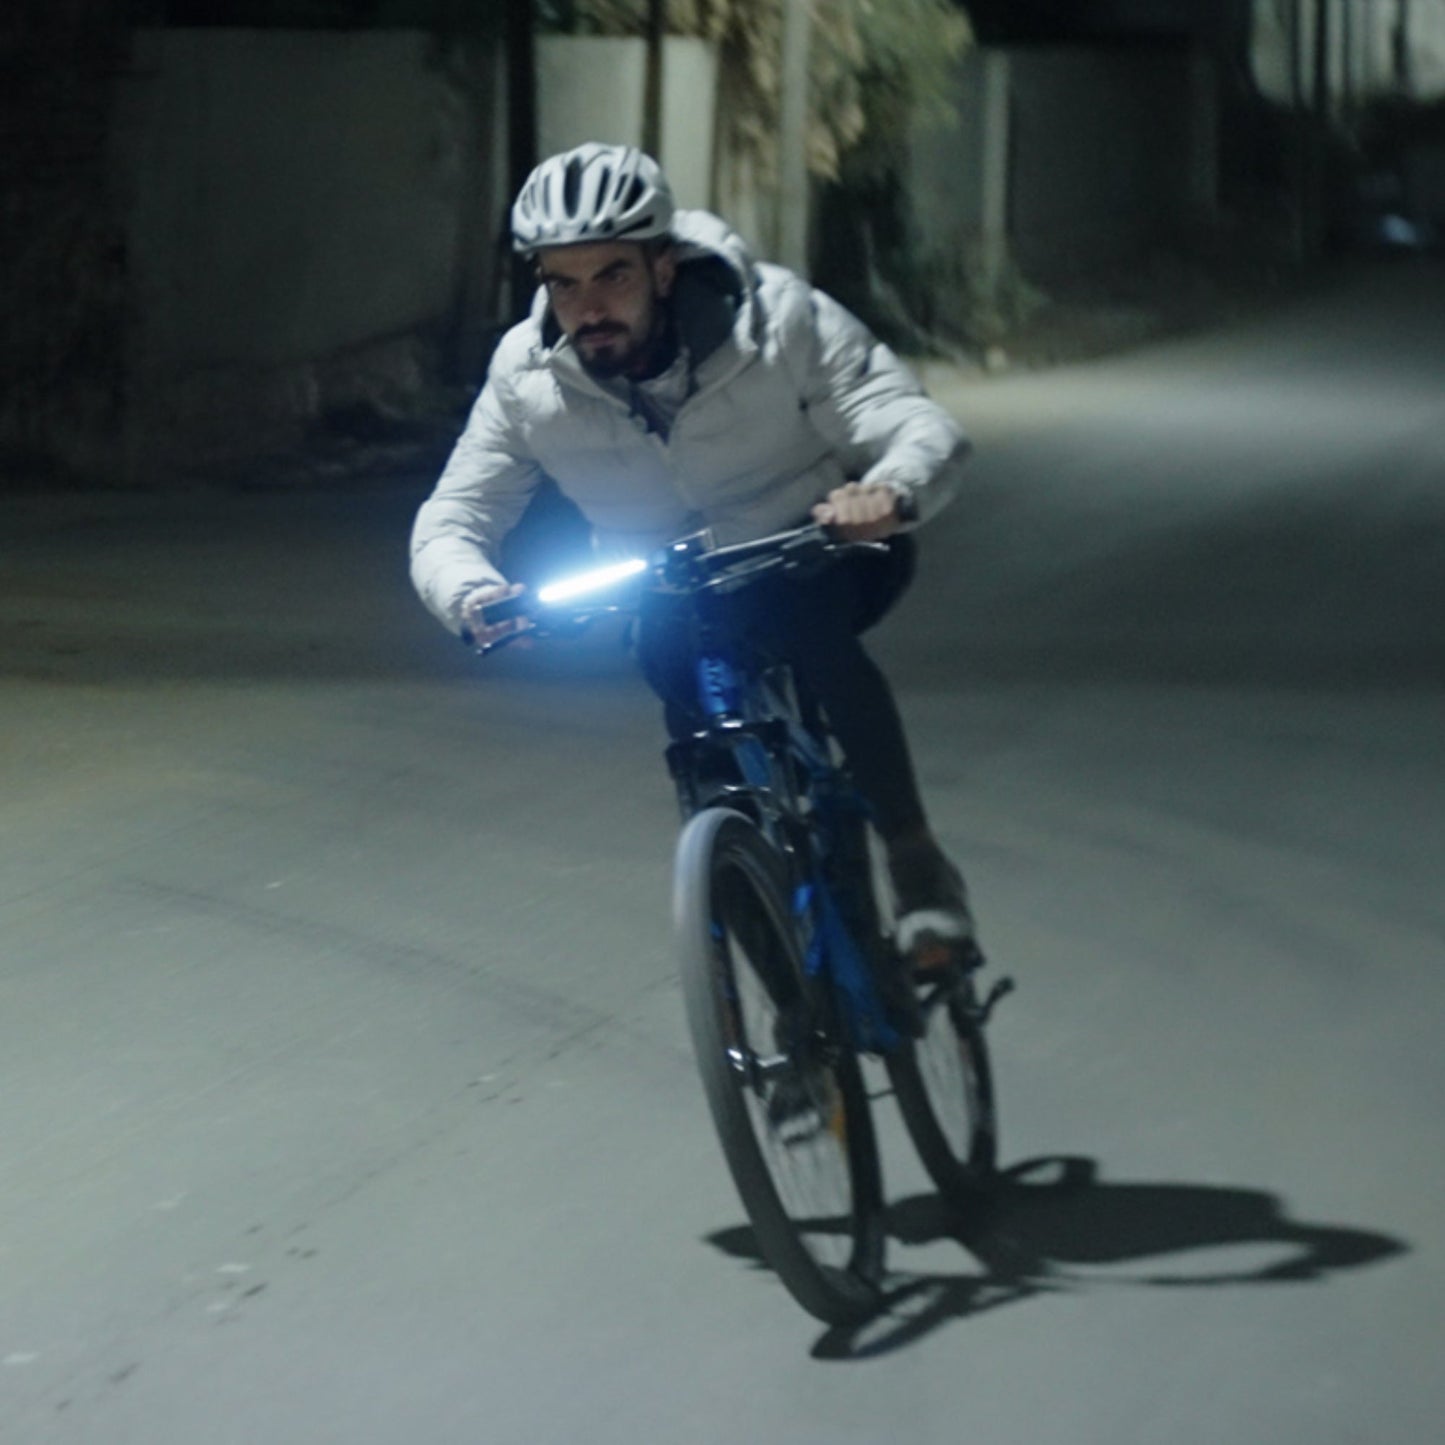 JordiLight Handlebar Attachment Kit: Secure Flashlight Mount for Bikes & Motorcycles - JordiLight Inc.